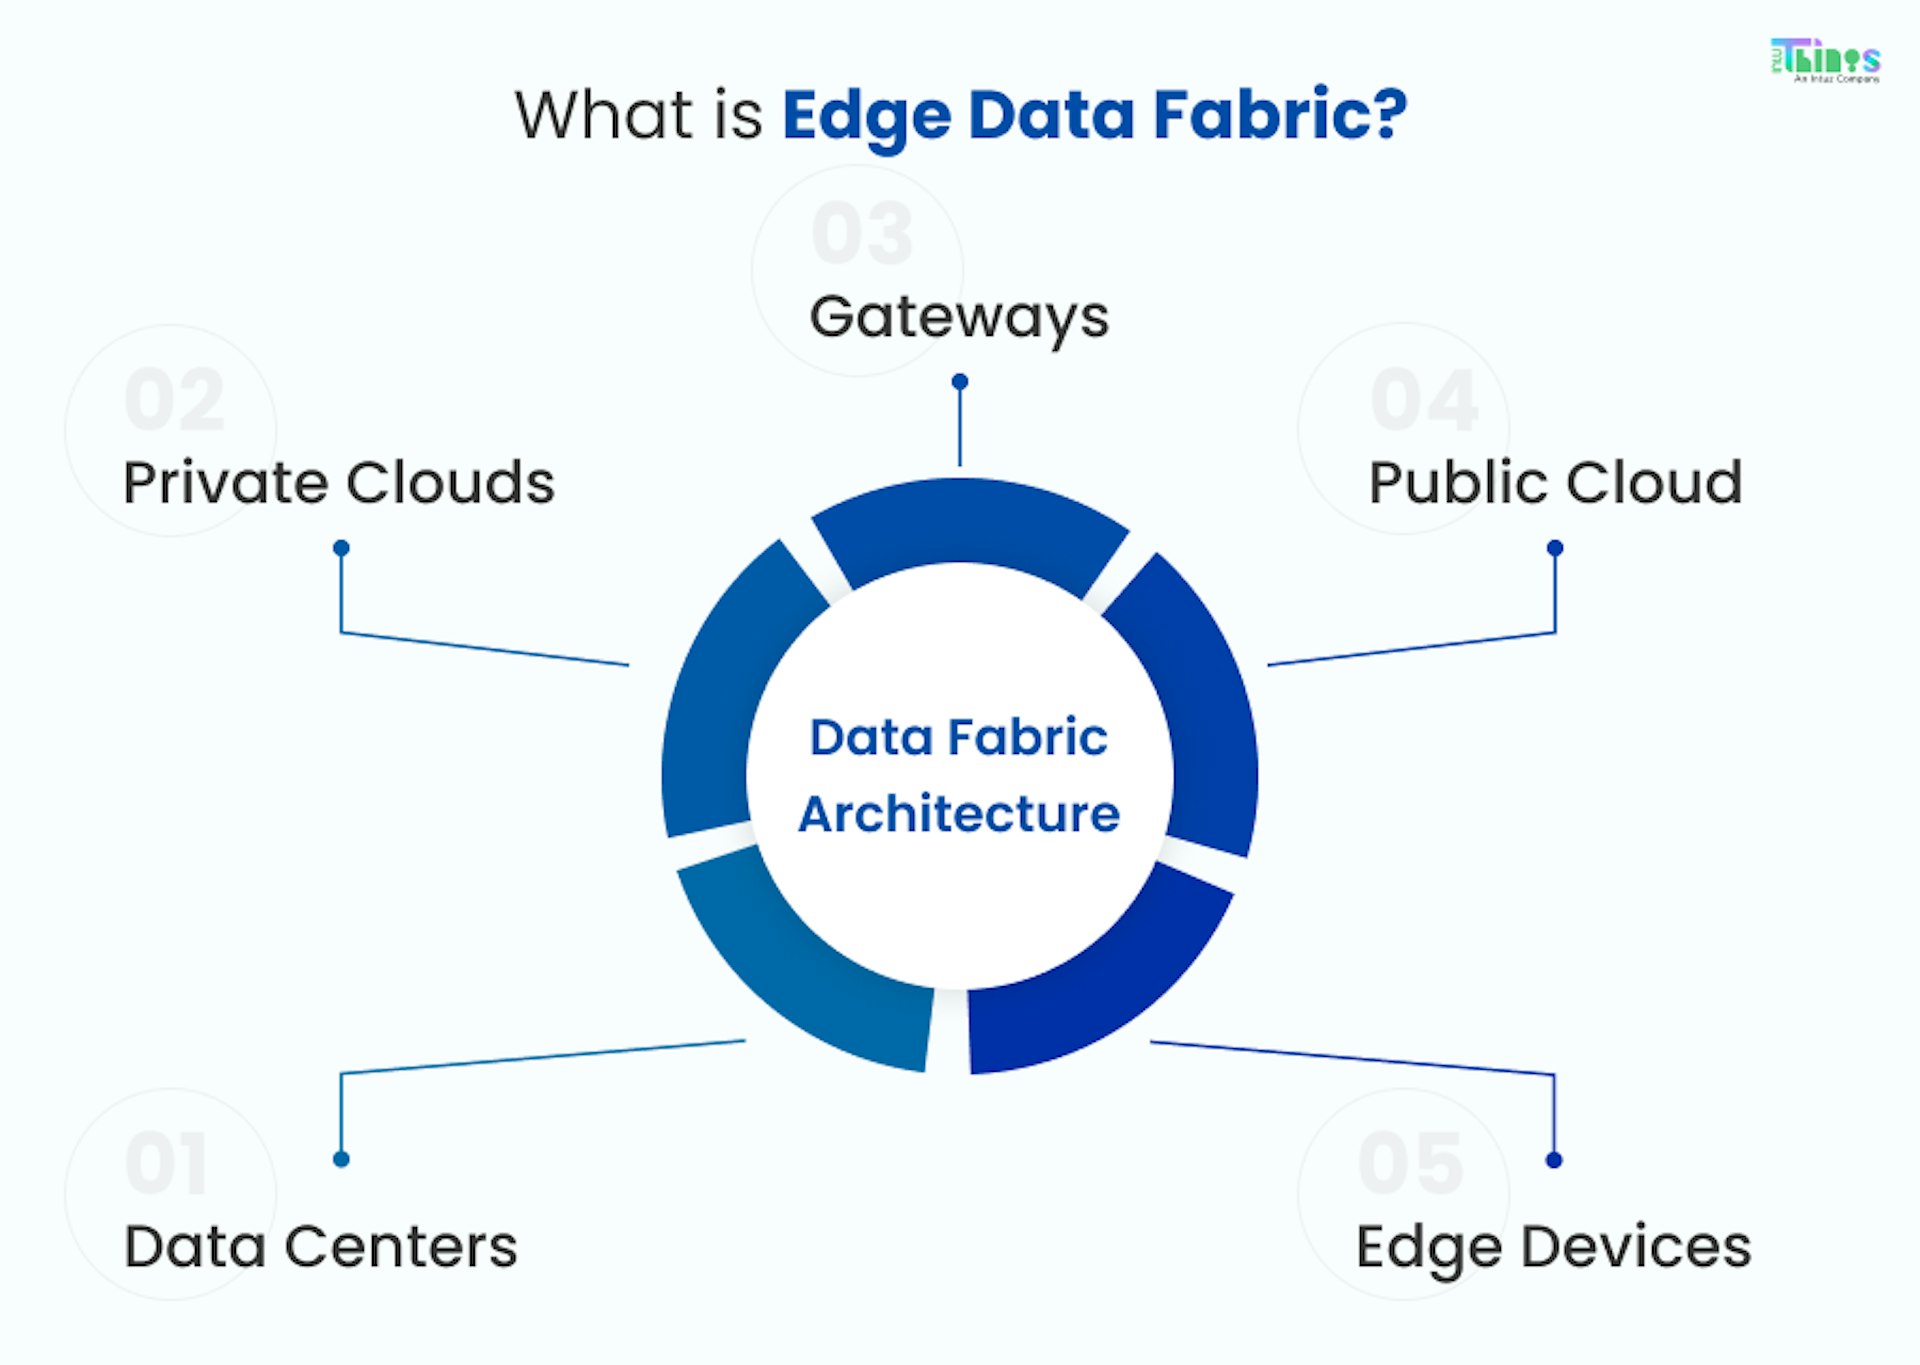 Edge data fabric